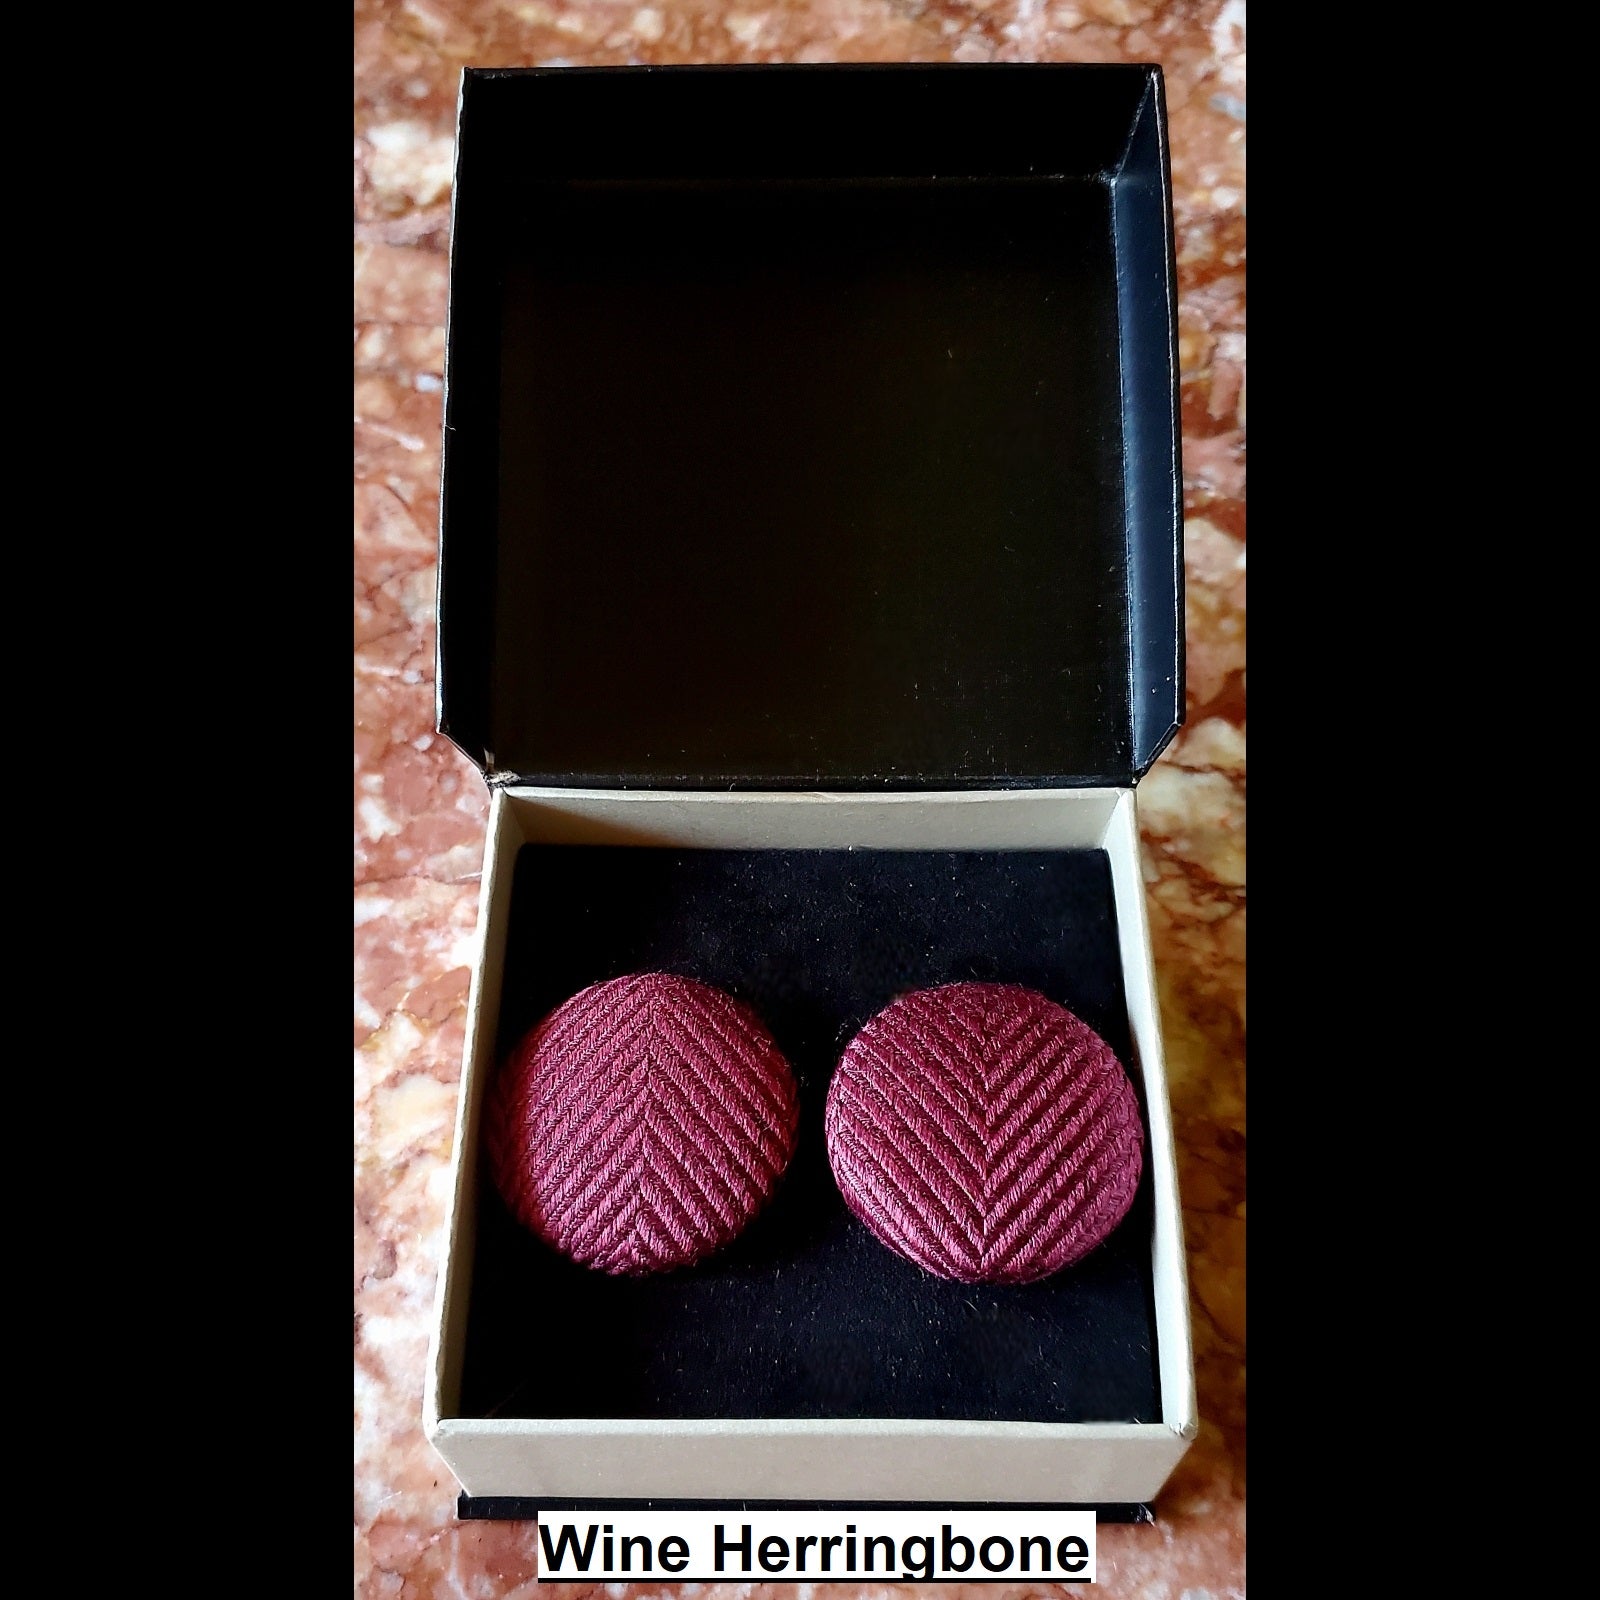 Wine Herringbone print button earrings in jewelry box